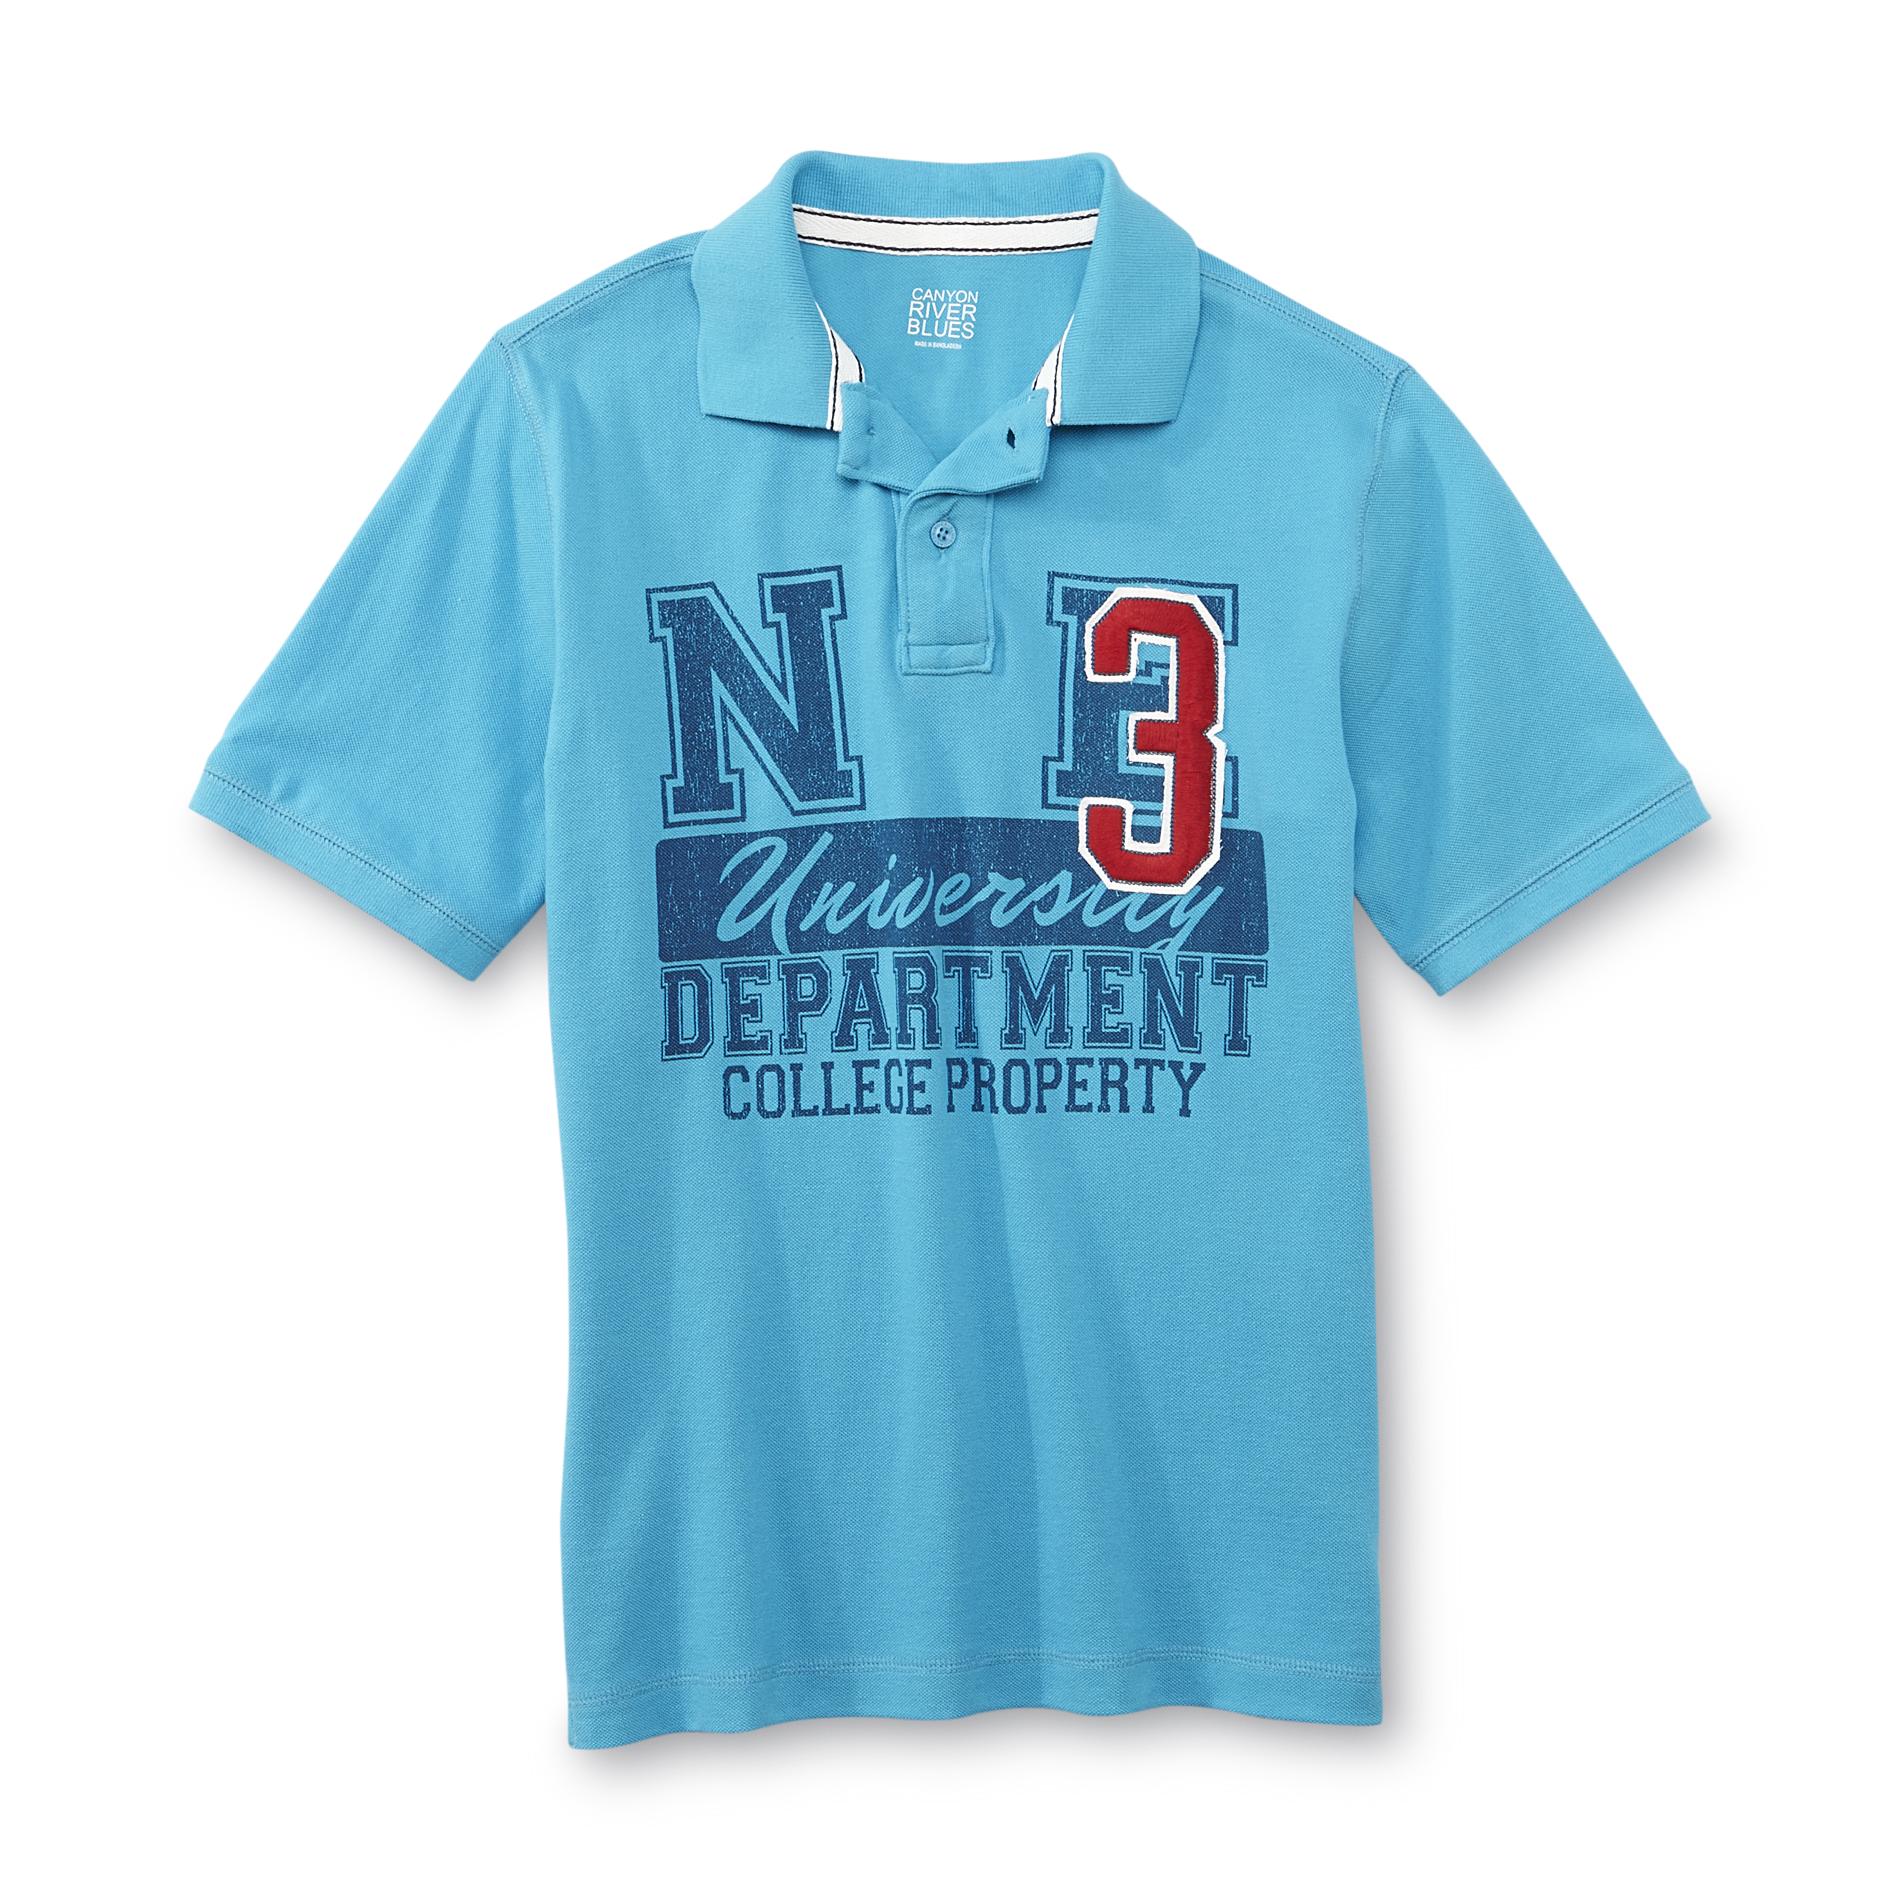 Canyon River Blues Boy's Graphic Polo Shirt - University Dept.